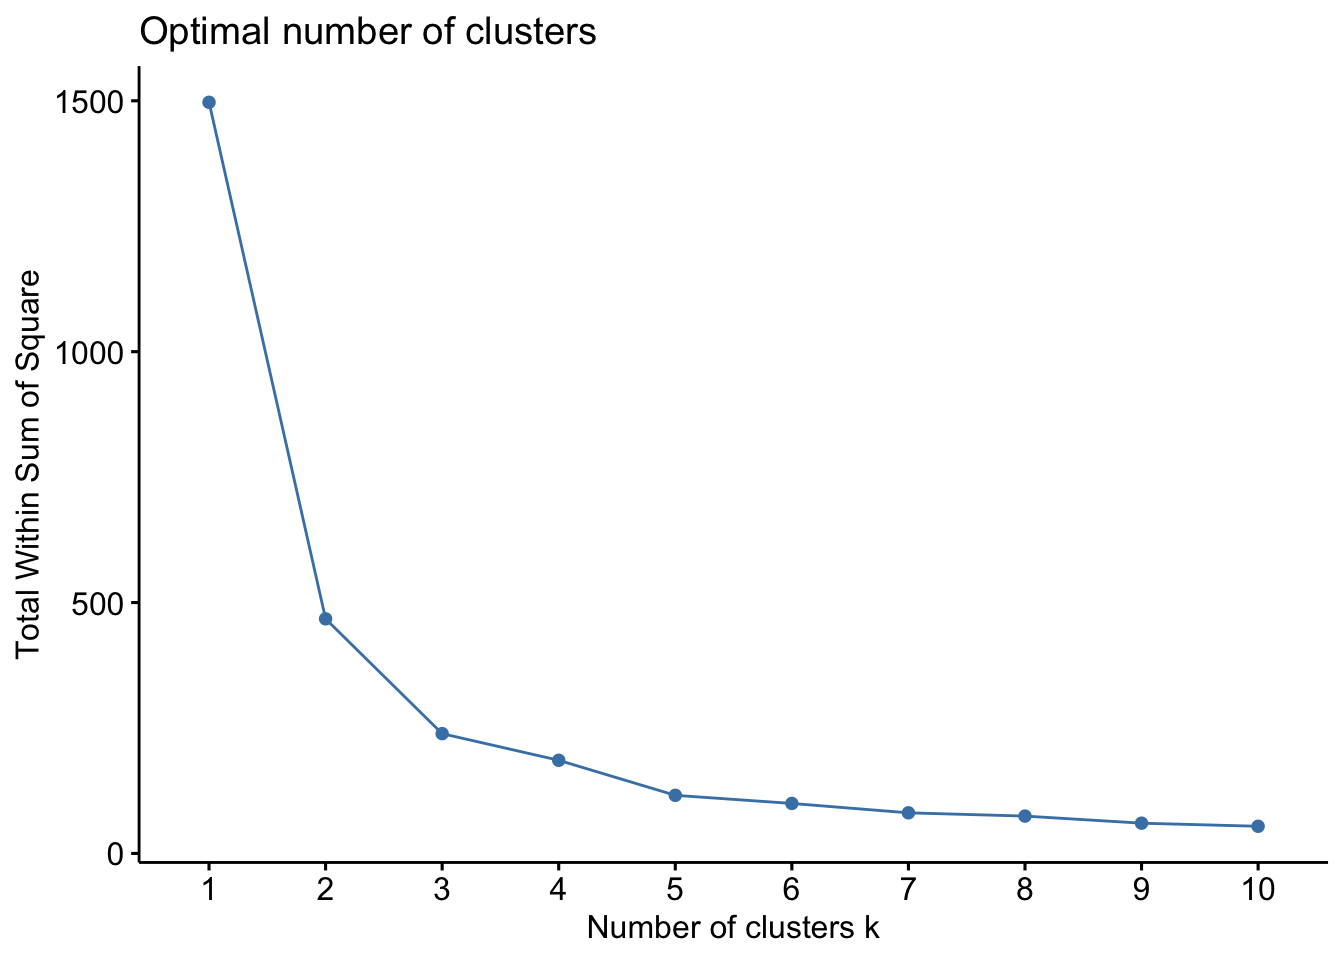 Optimal Number of Clusters